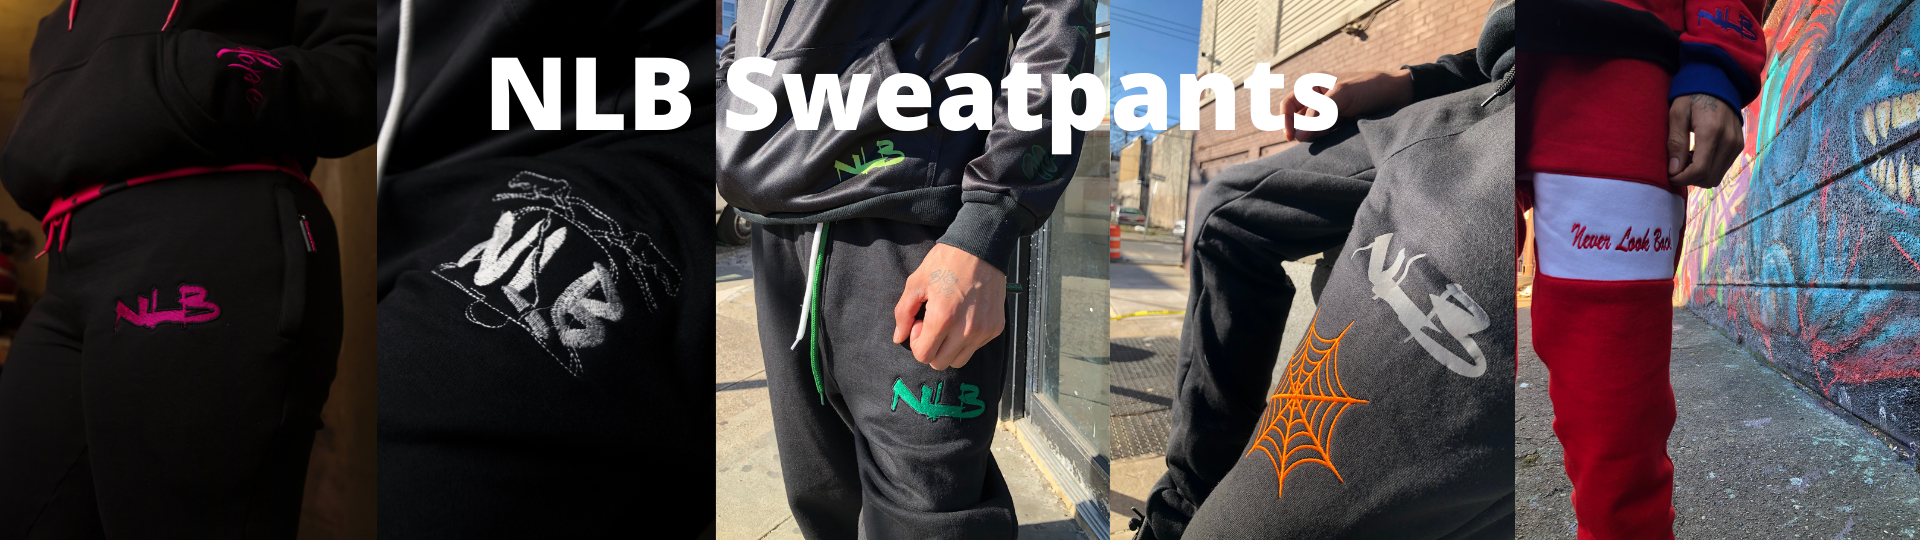 NLB Sweatpants - Never-Look-Back-nlb